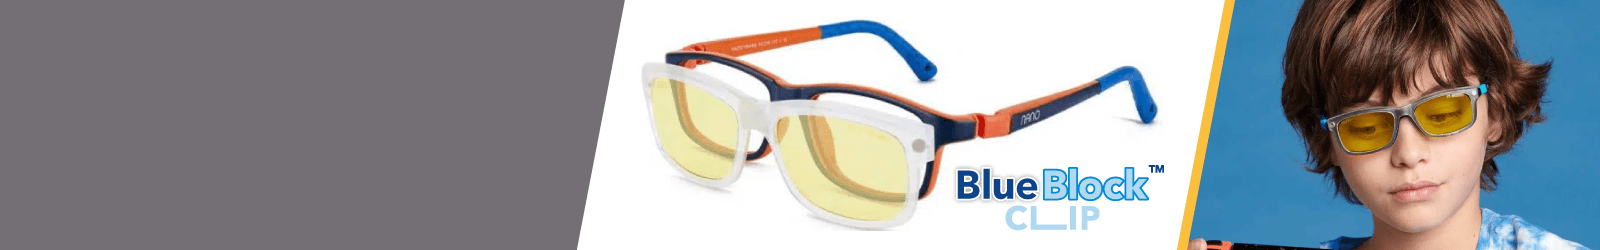 Nano Blue Block Clip Kids Sunglasses